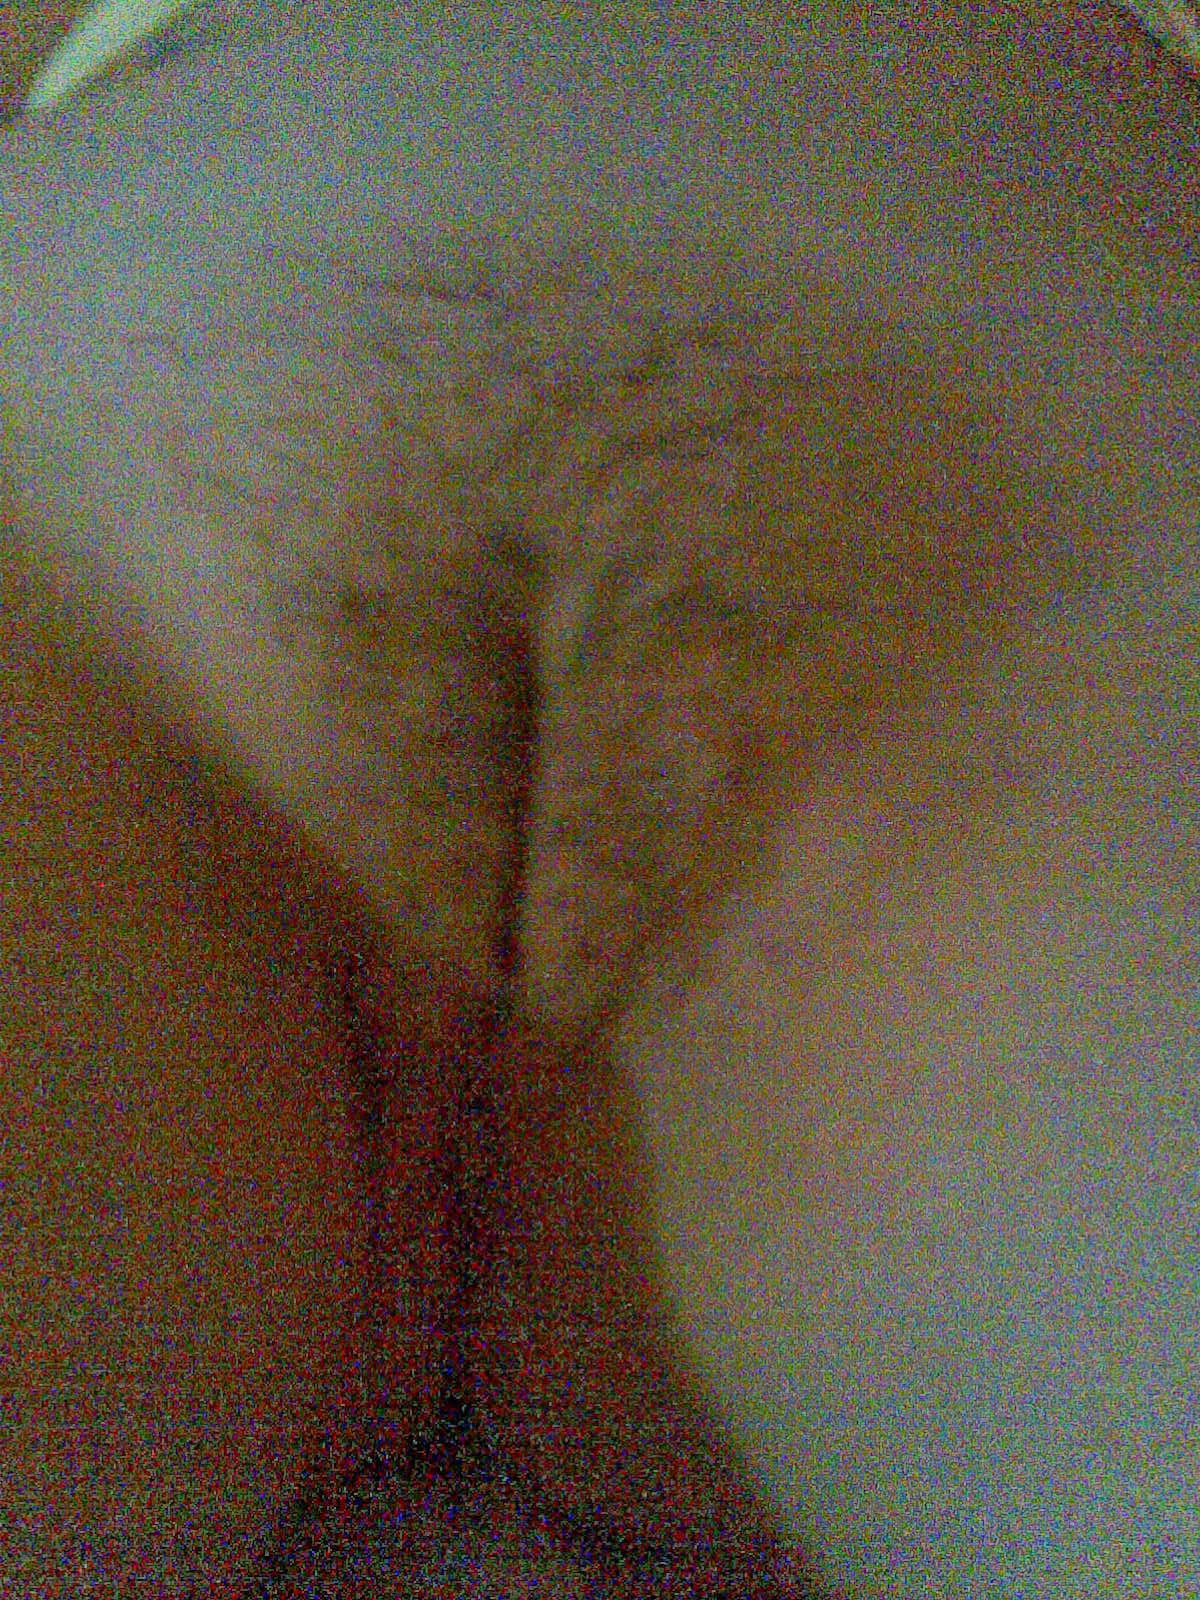 Maui Taylor Pussy - Maui Taylor Wiki Nude Photo - PHOTO PORNO. 